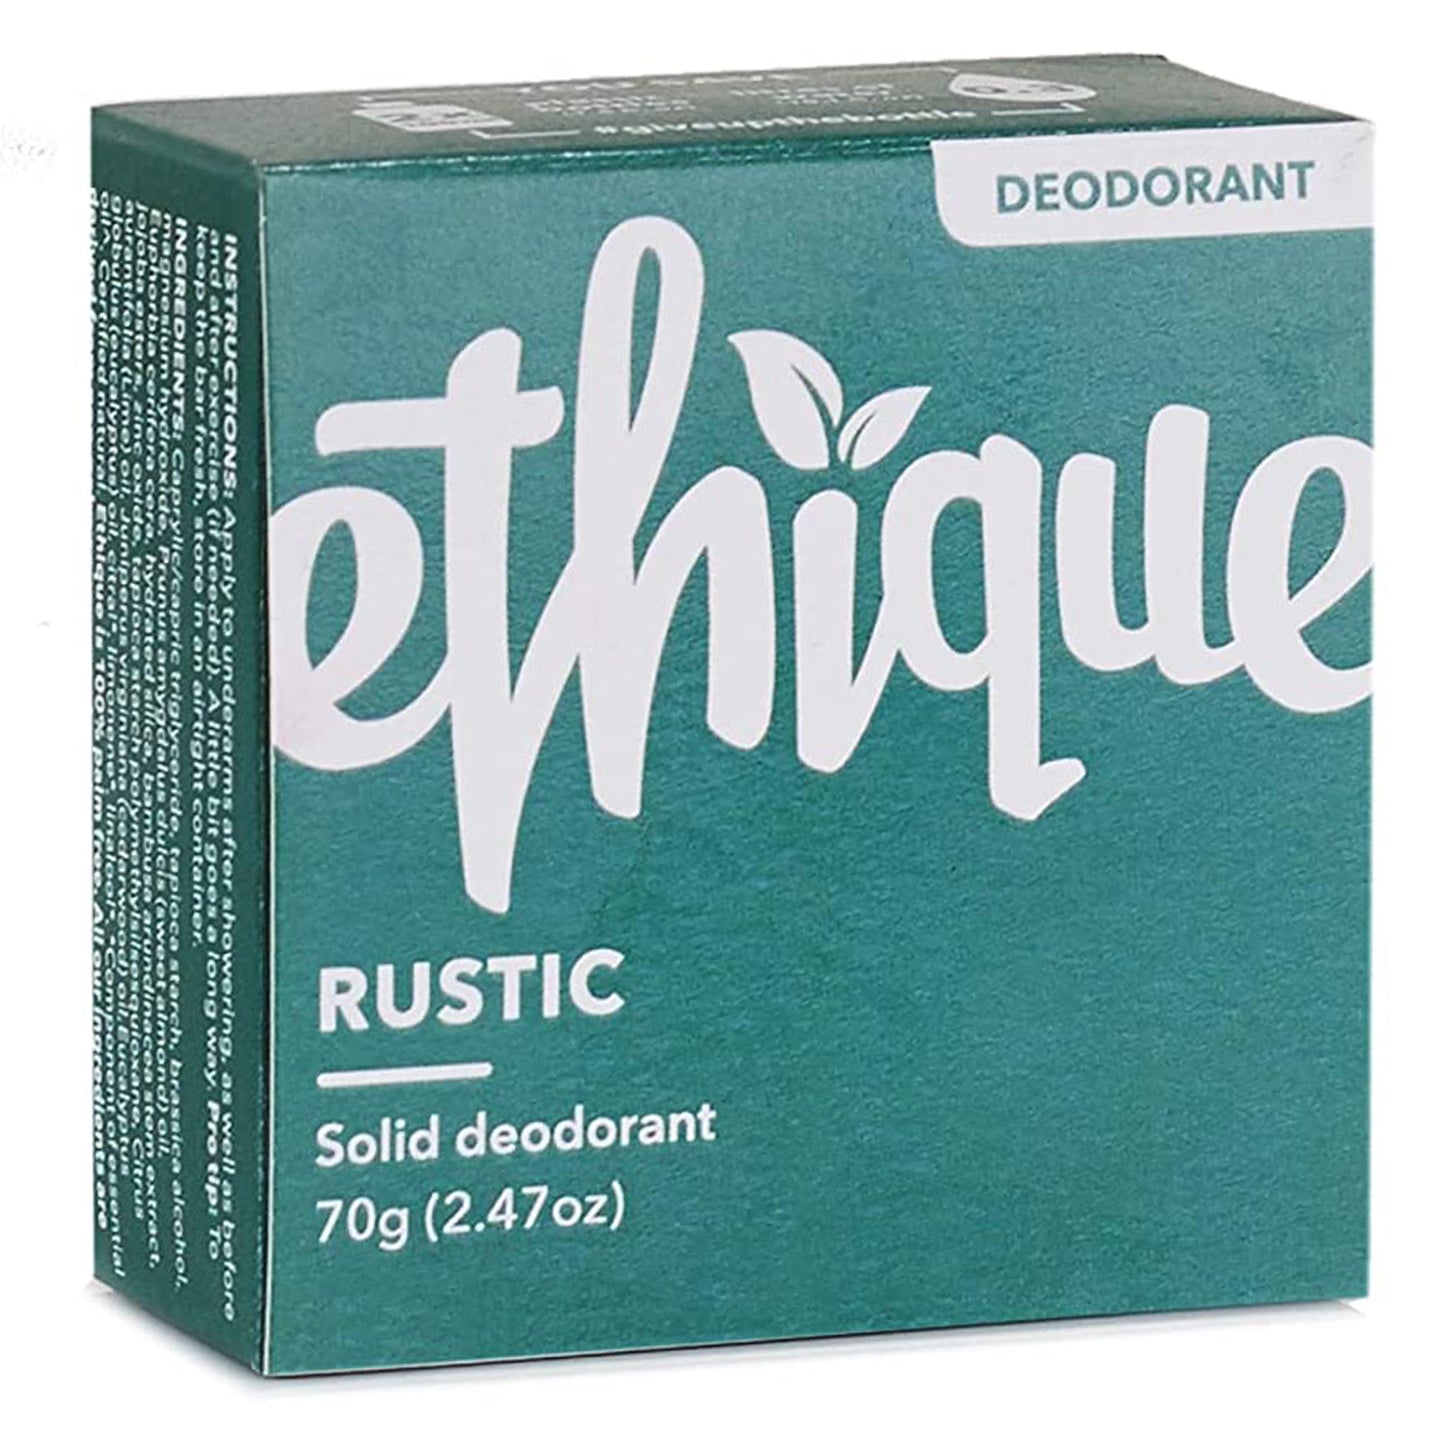 Rustic Lime & Eucalyptus Solid Deodorant